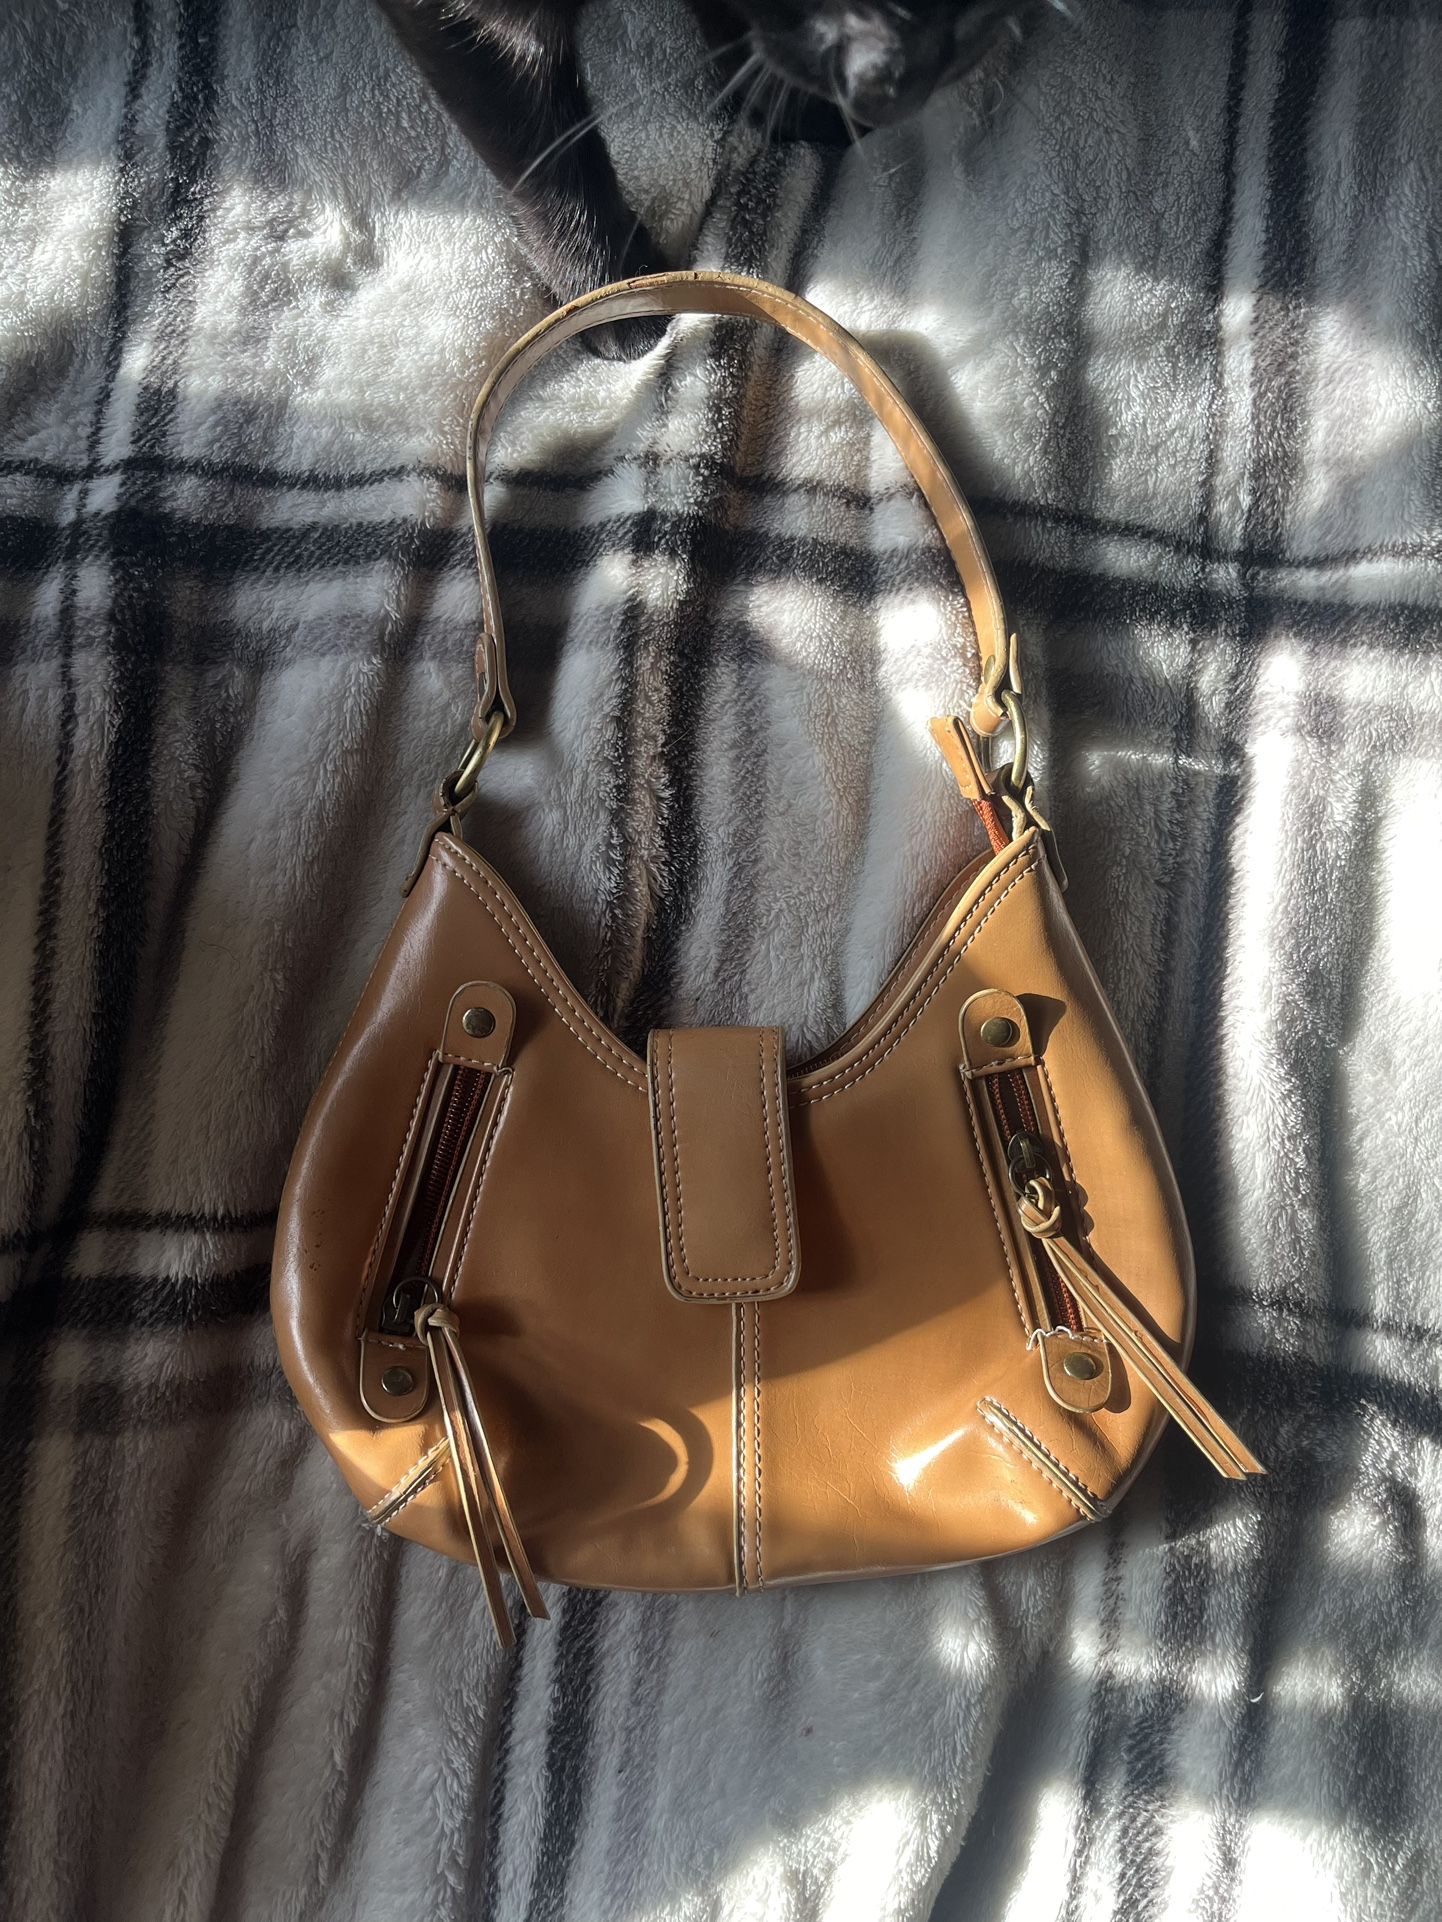 Cute lil leather shoulder purse 